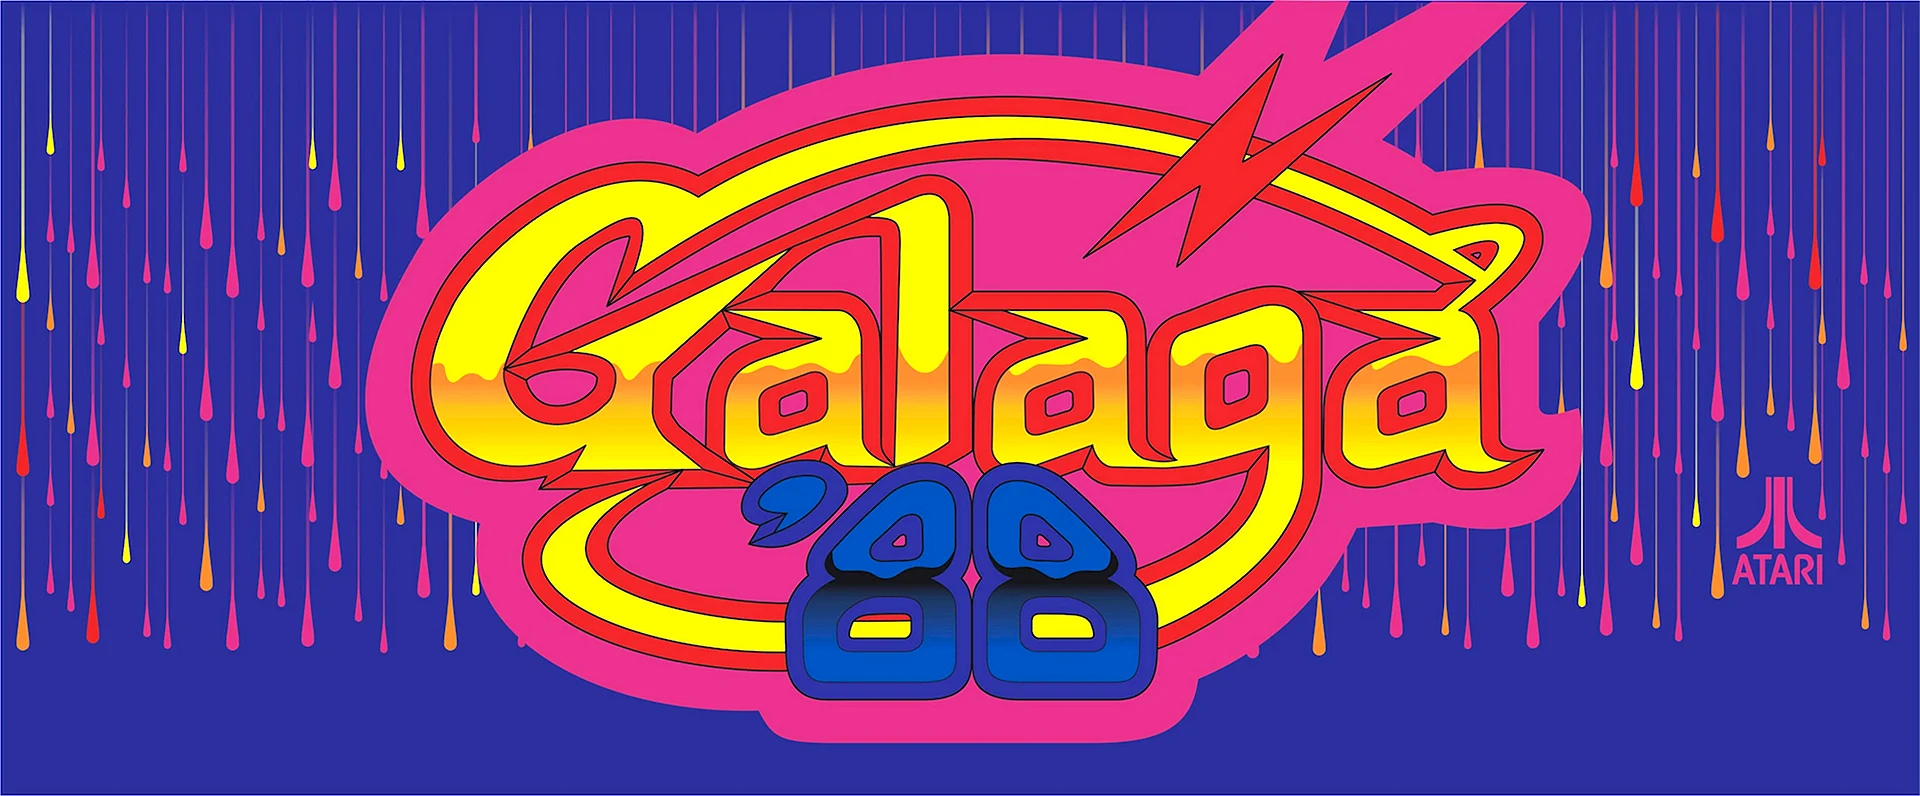 Galaga 88 Pc Engine Wallpaper